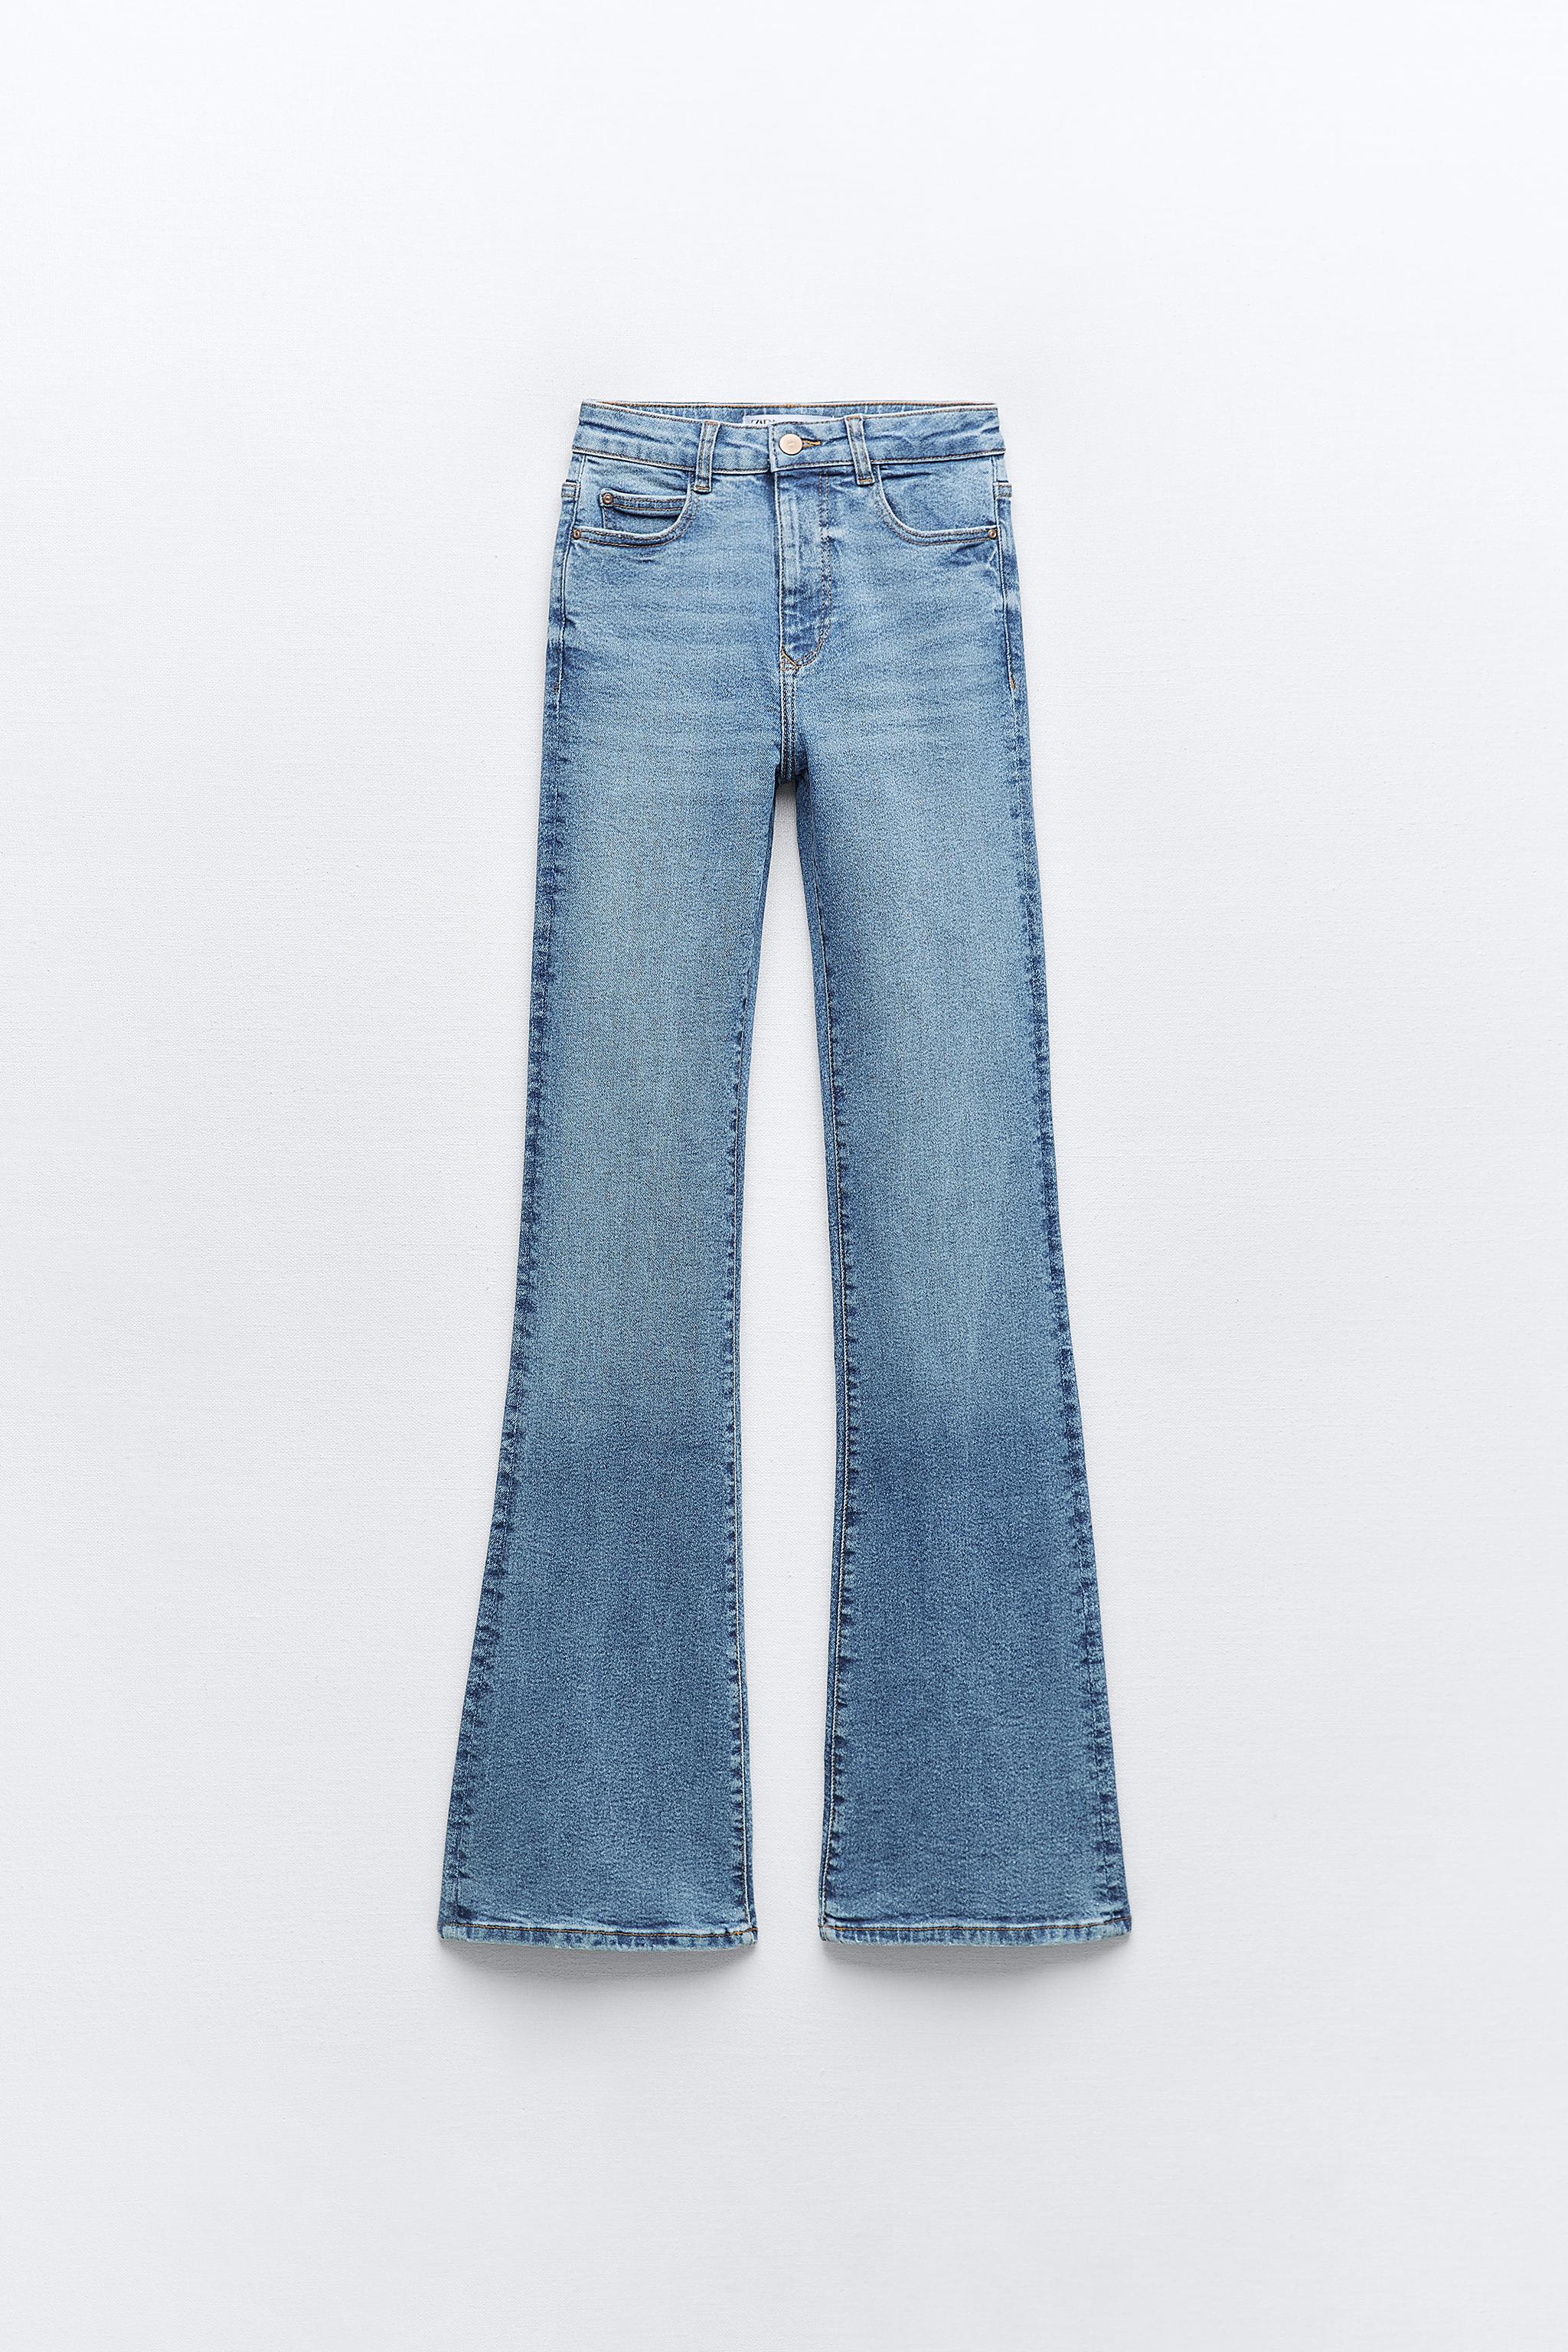 ZARA - Calça jeans flare